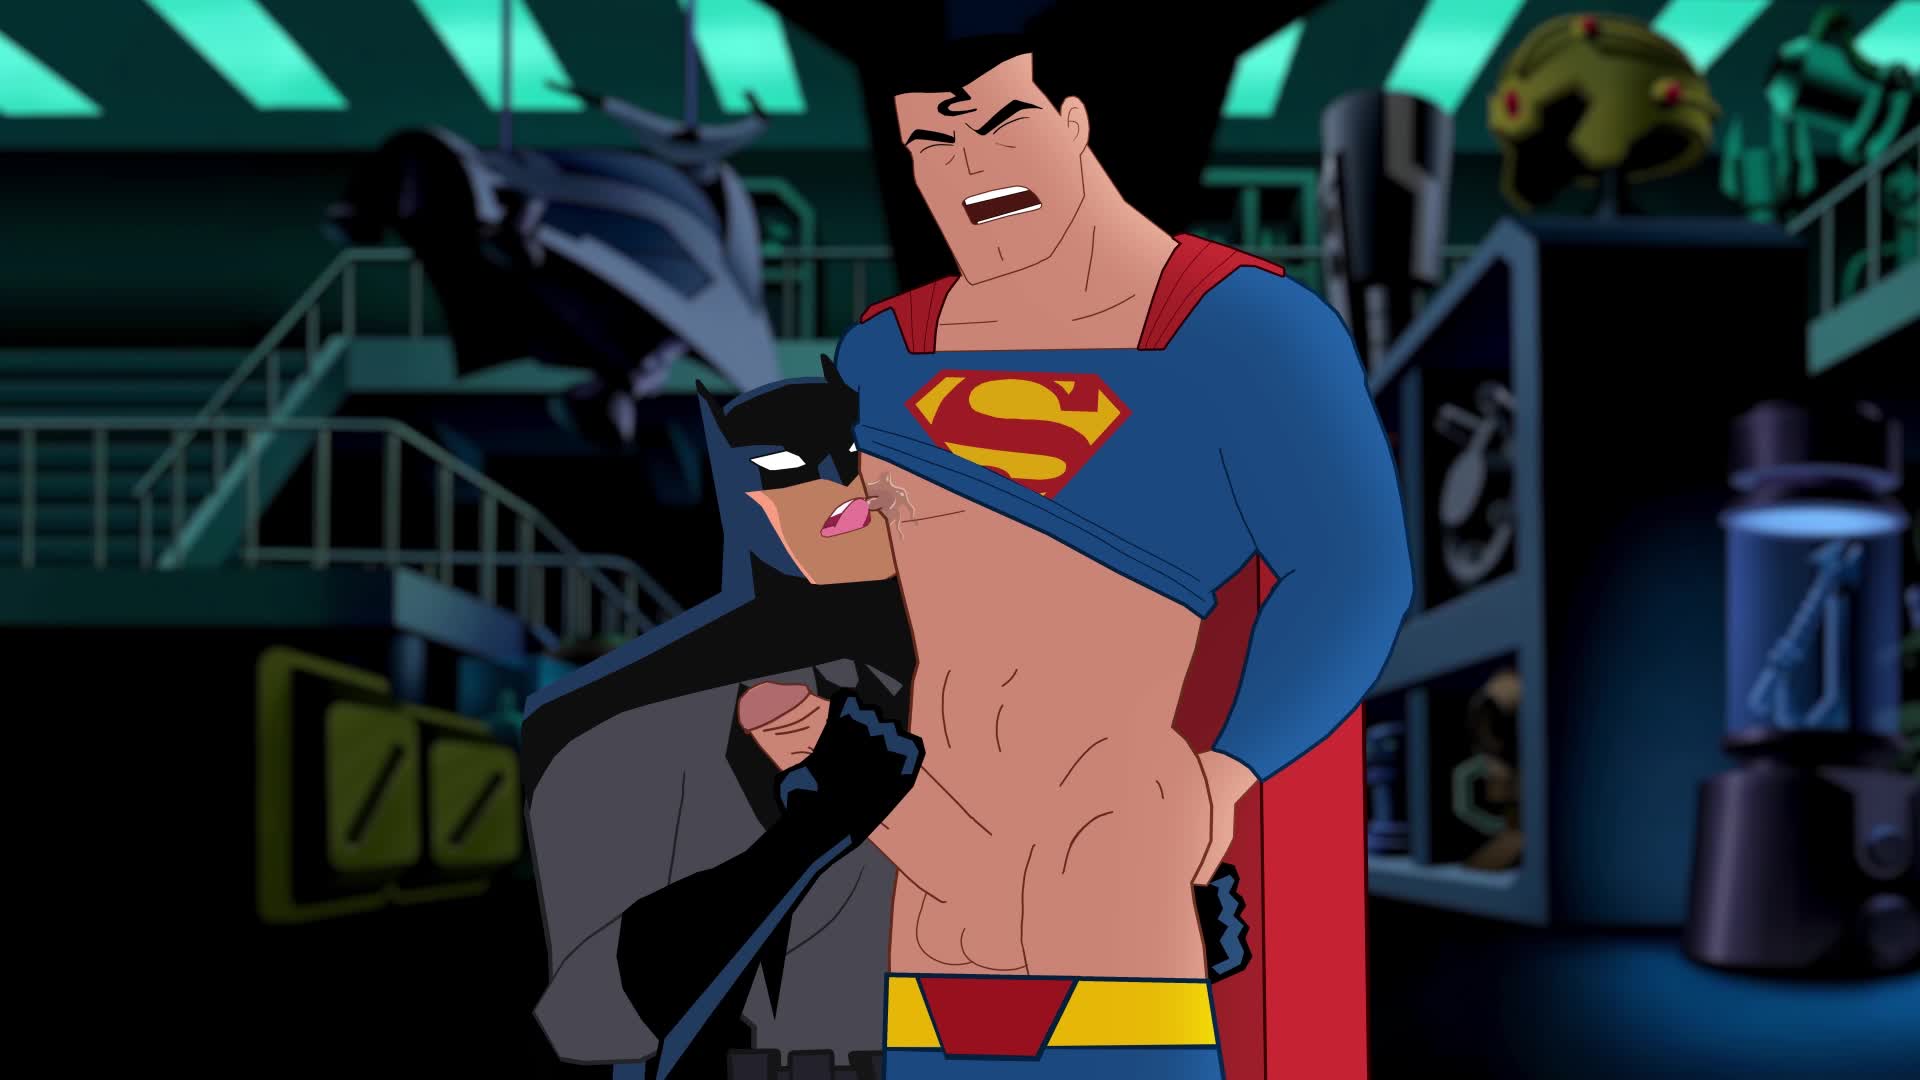 Batman X Superman: Dawn of JustASS - BoyFriendTV.com